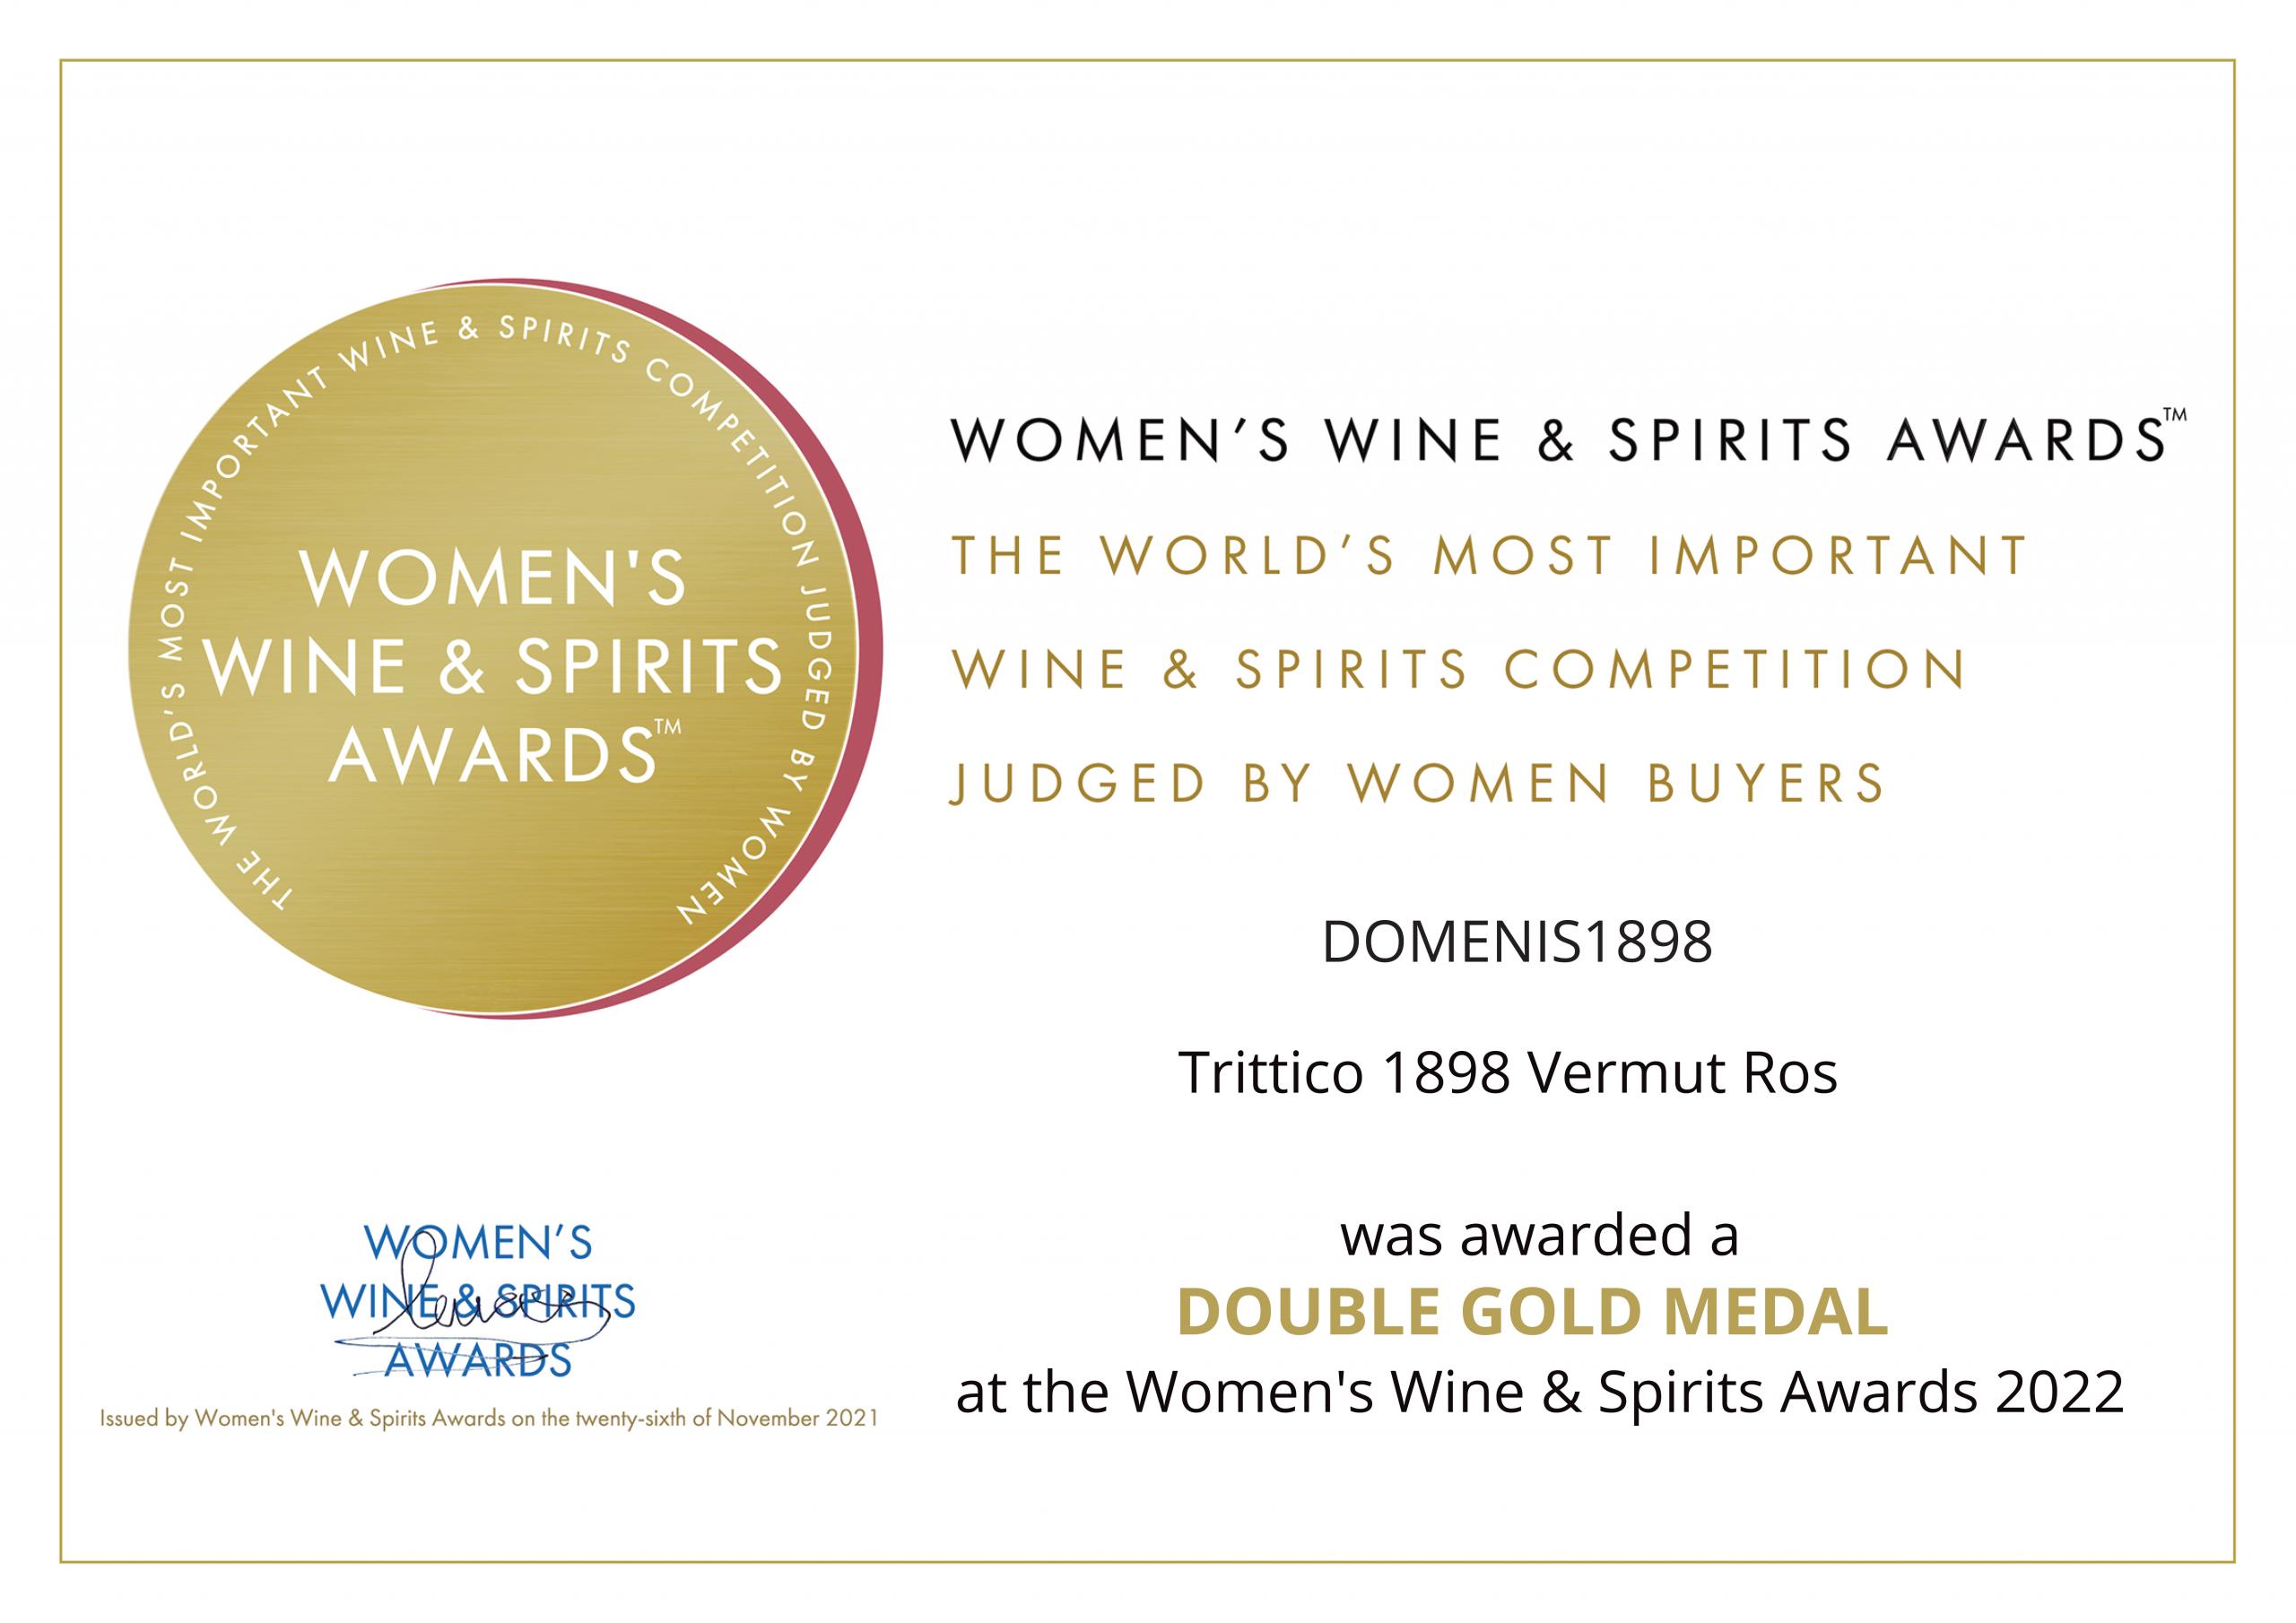 Women’s Wine & Spirit Awards 2022 – Double Gold Medal – Trittico 1898 Vermut Ros